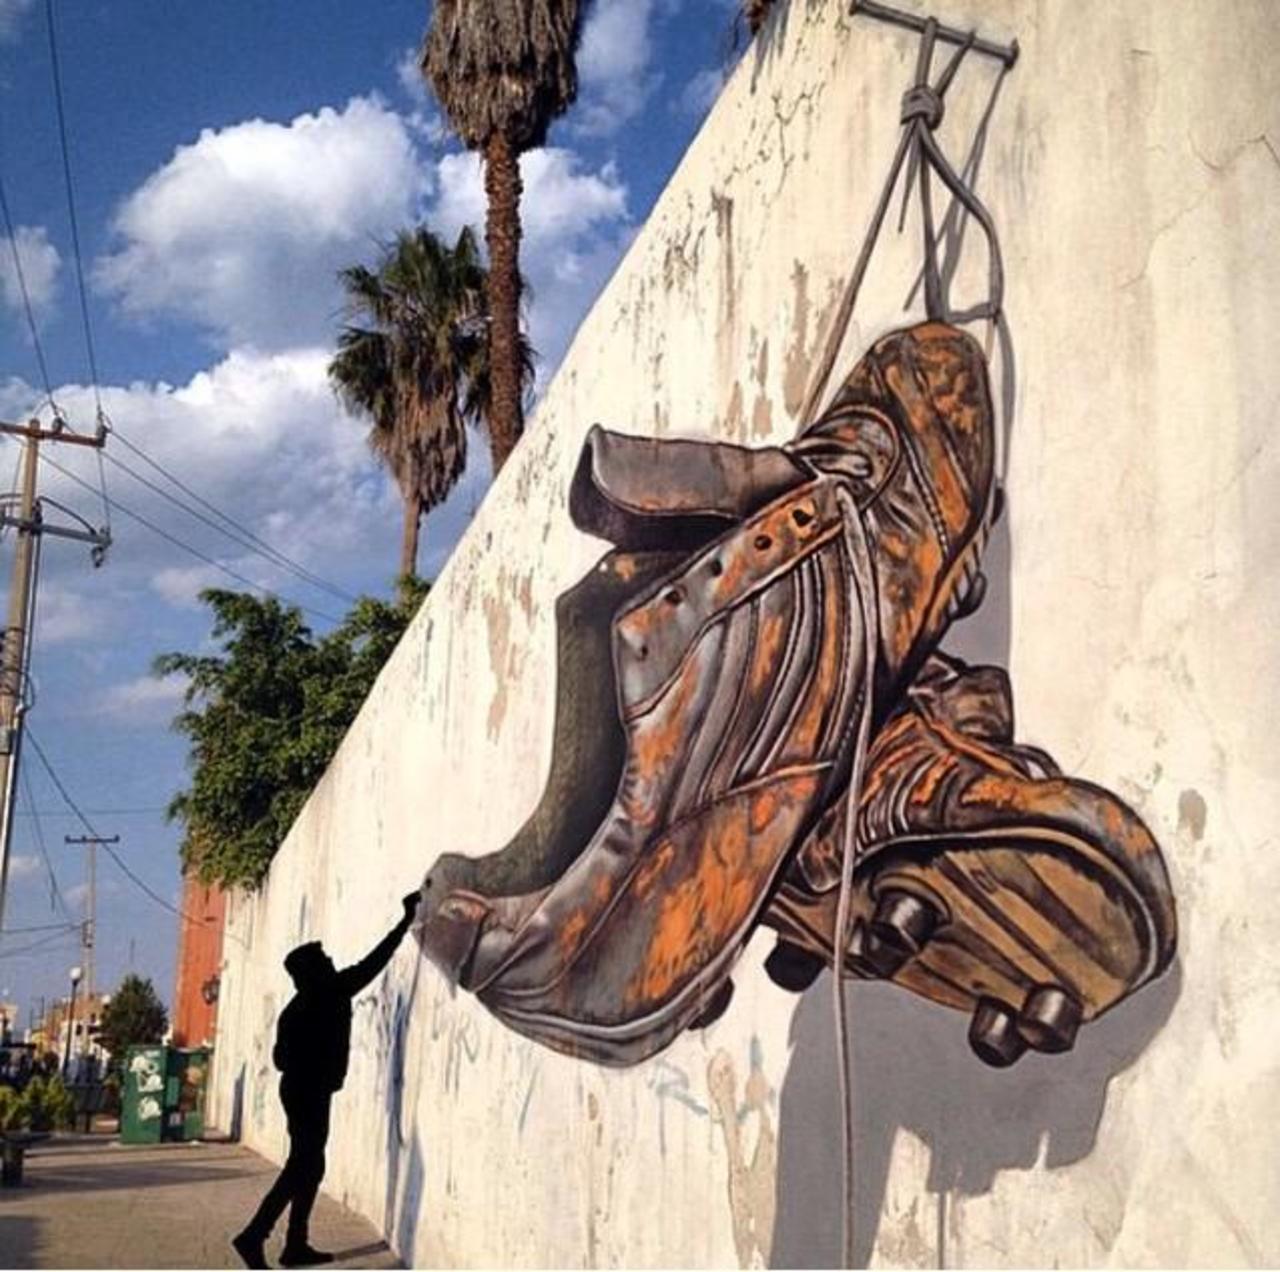 "@GoogleStreetArt: Awesome anamorphic 3D Street Art by Juandres Vera 
#art #graffiti #mural #streetart http://t.co/qDJKo8CIh6"